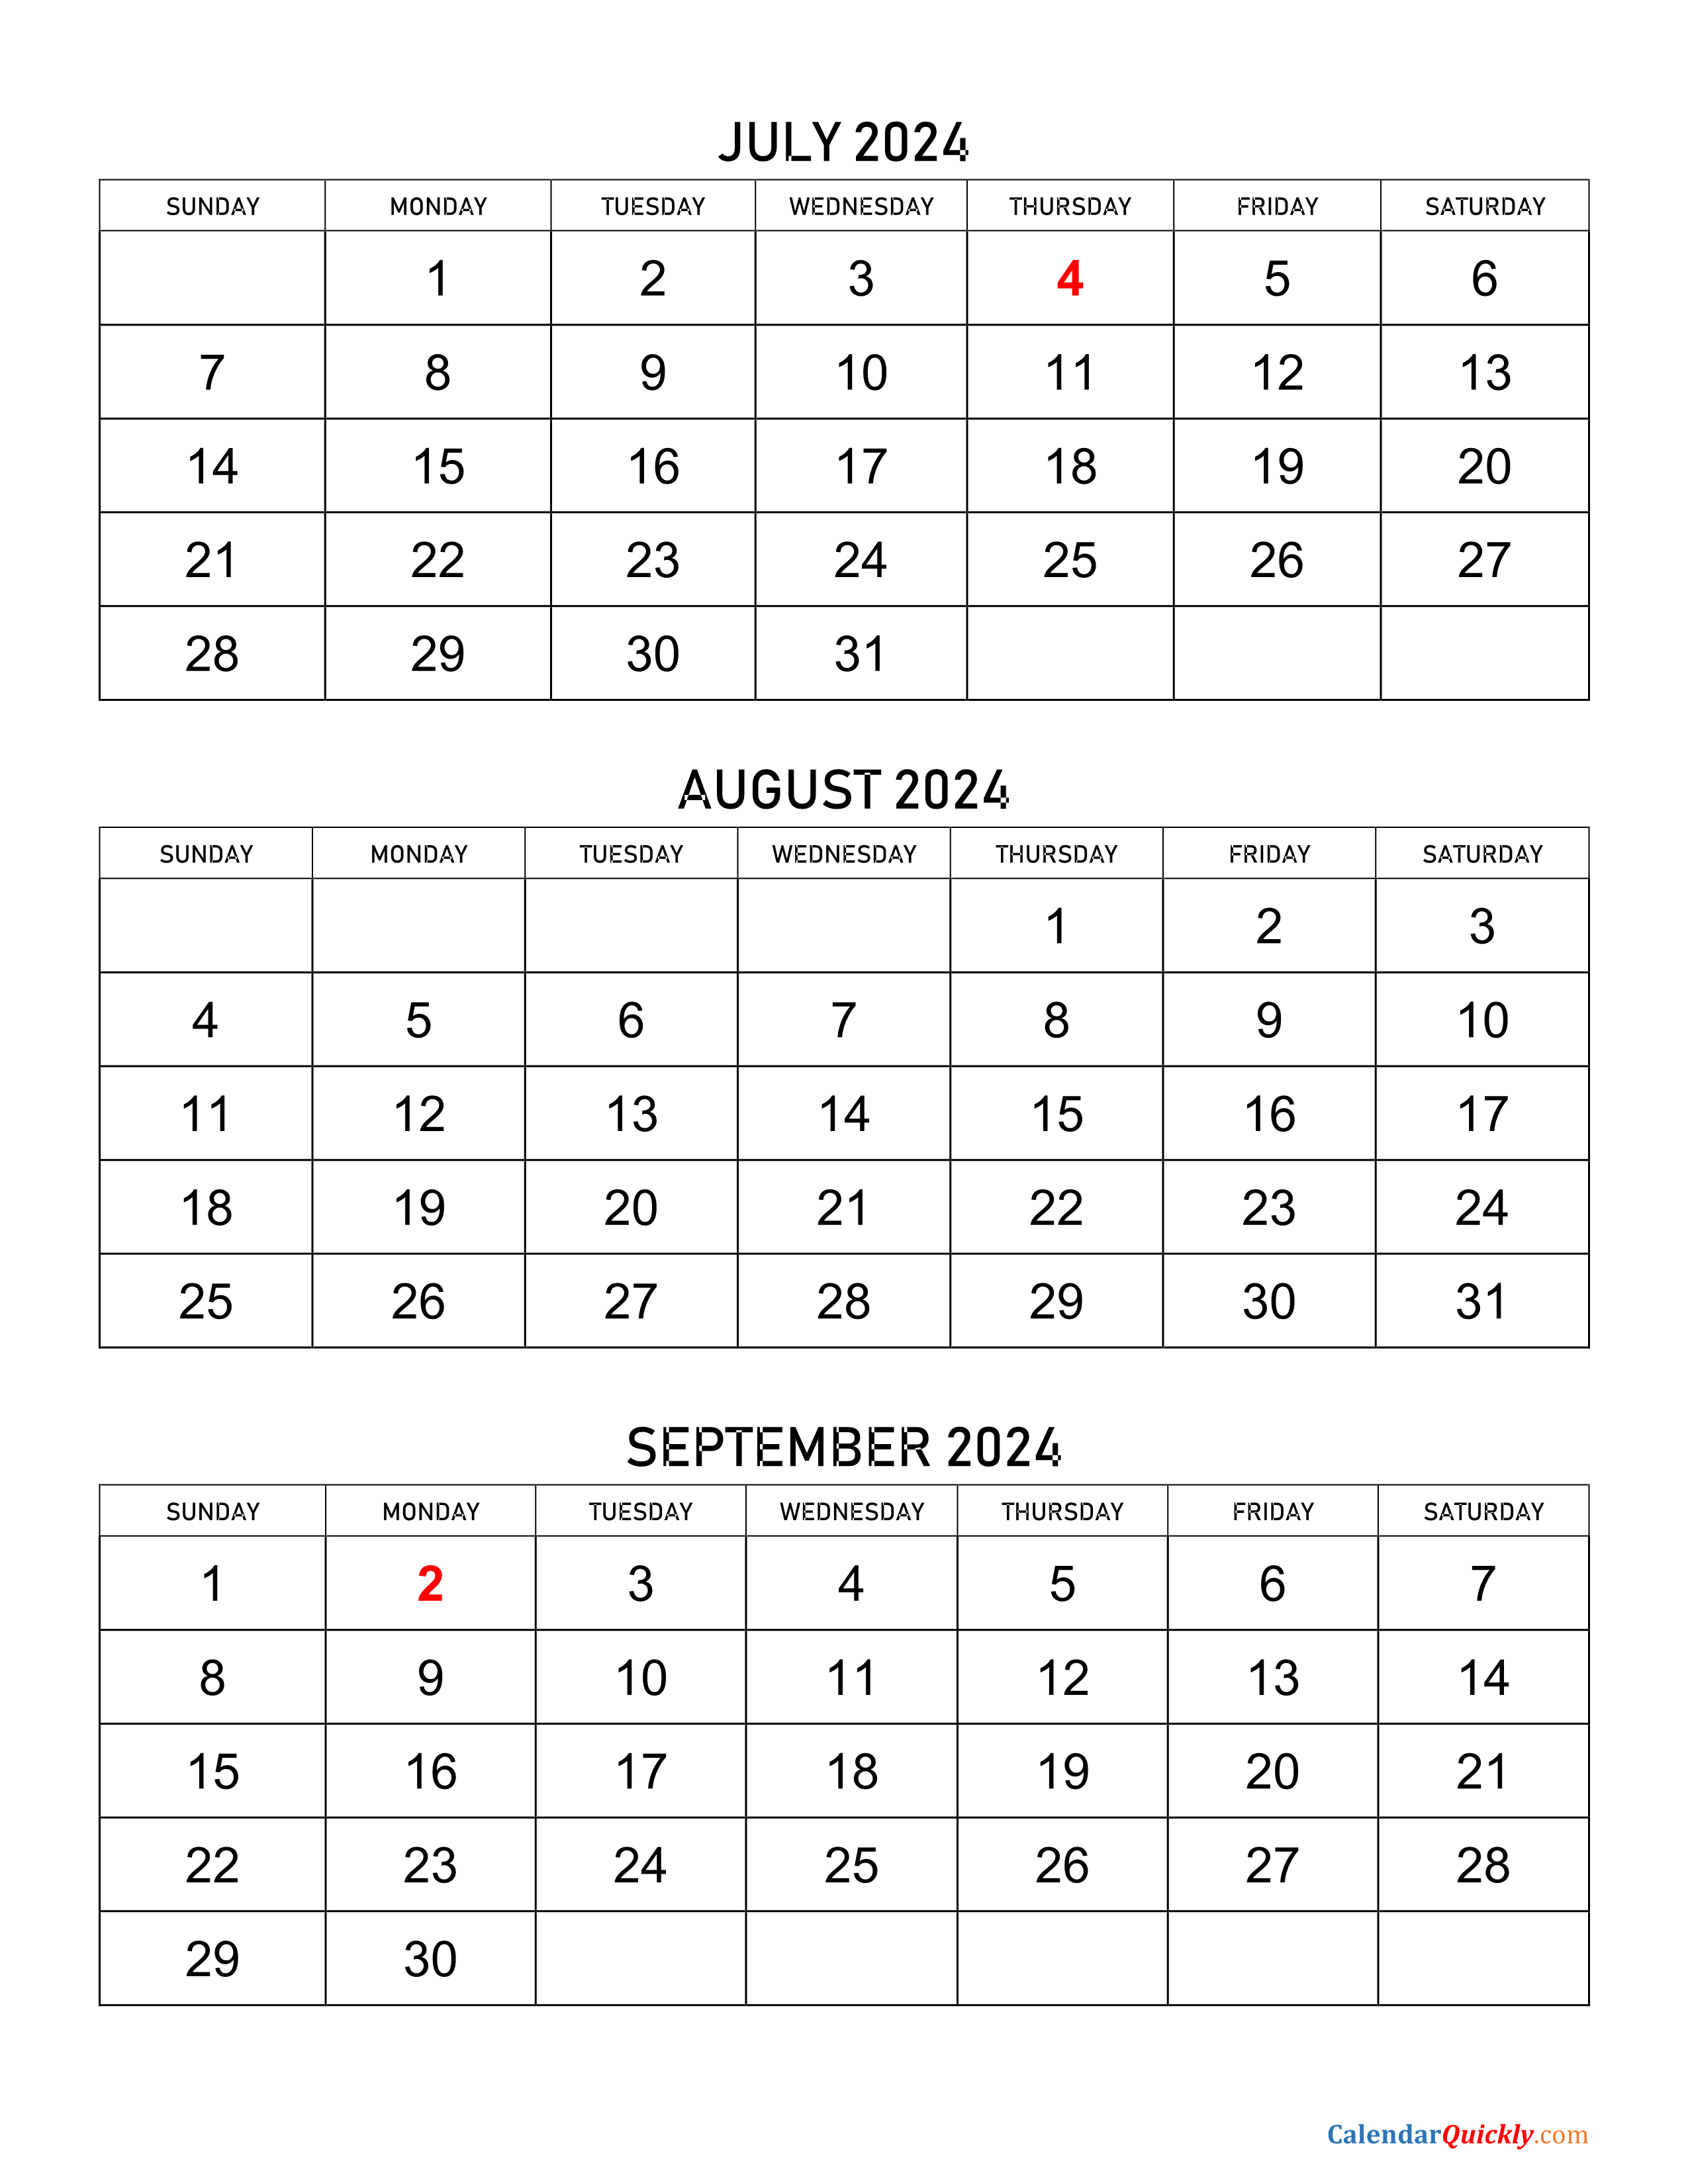 Calendar September 2024 Printable Free Calendar 2024 All Holidays - Free Printable Calendar August September October 2024